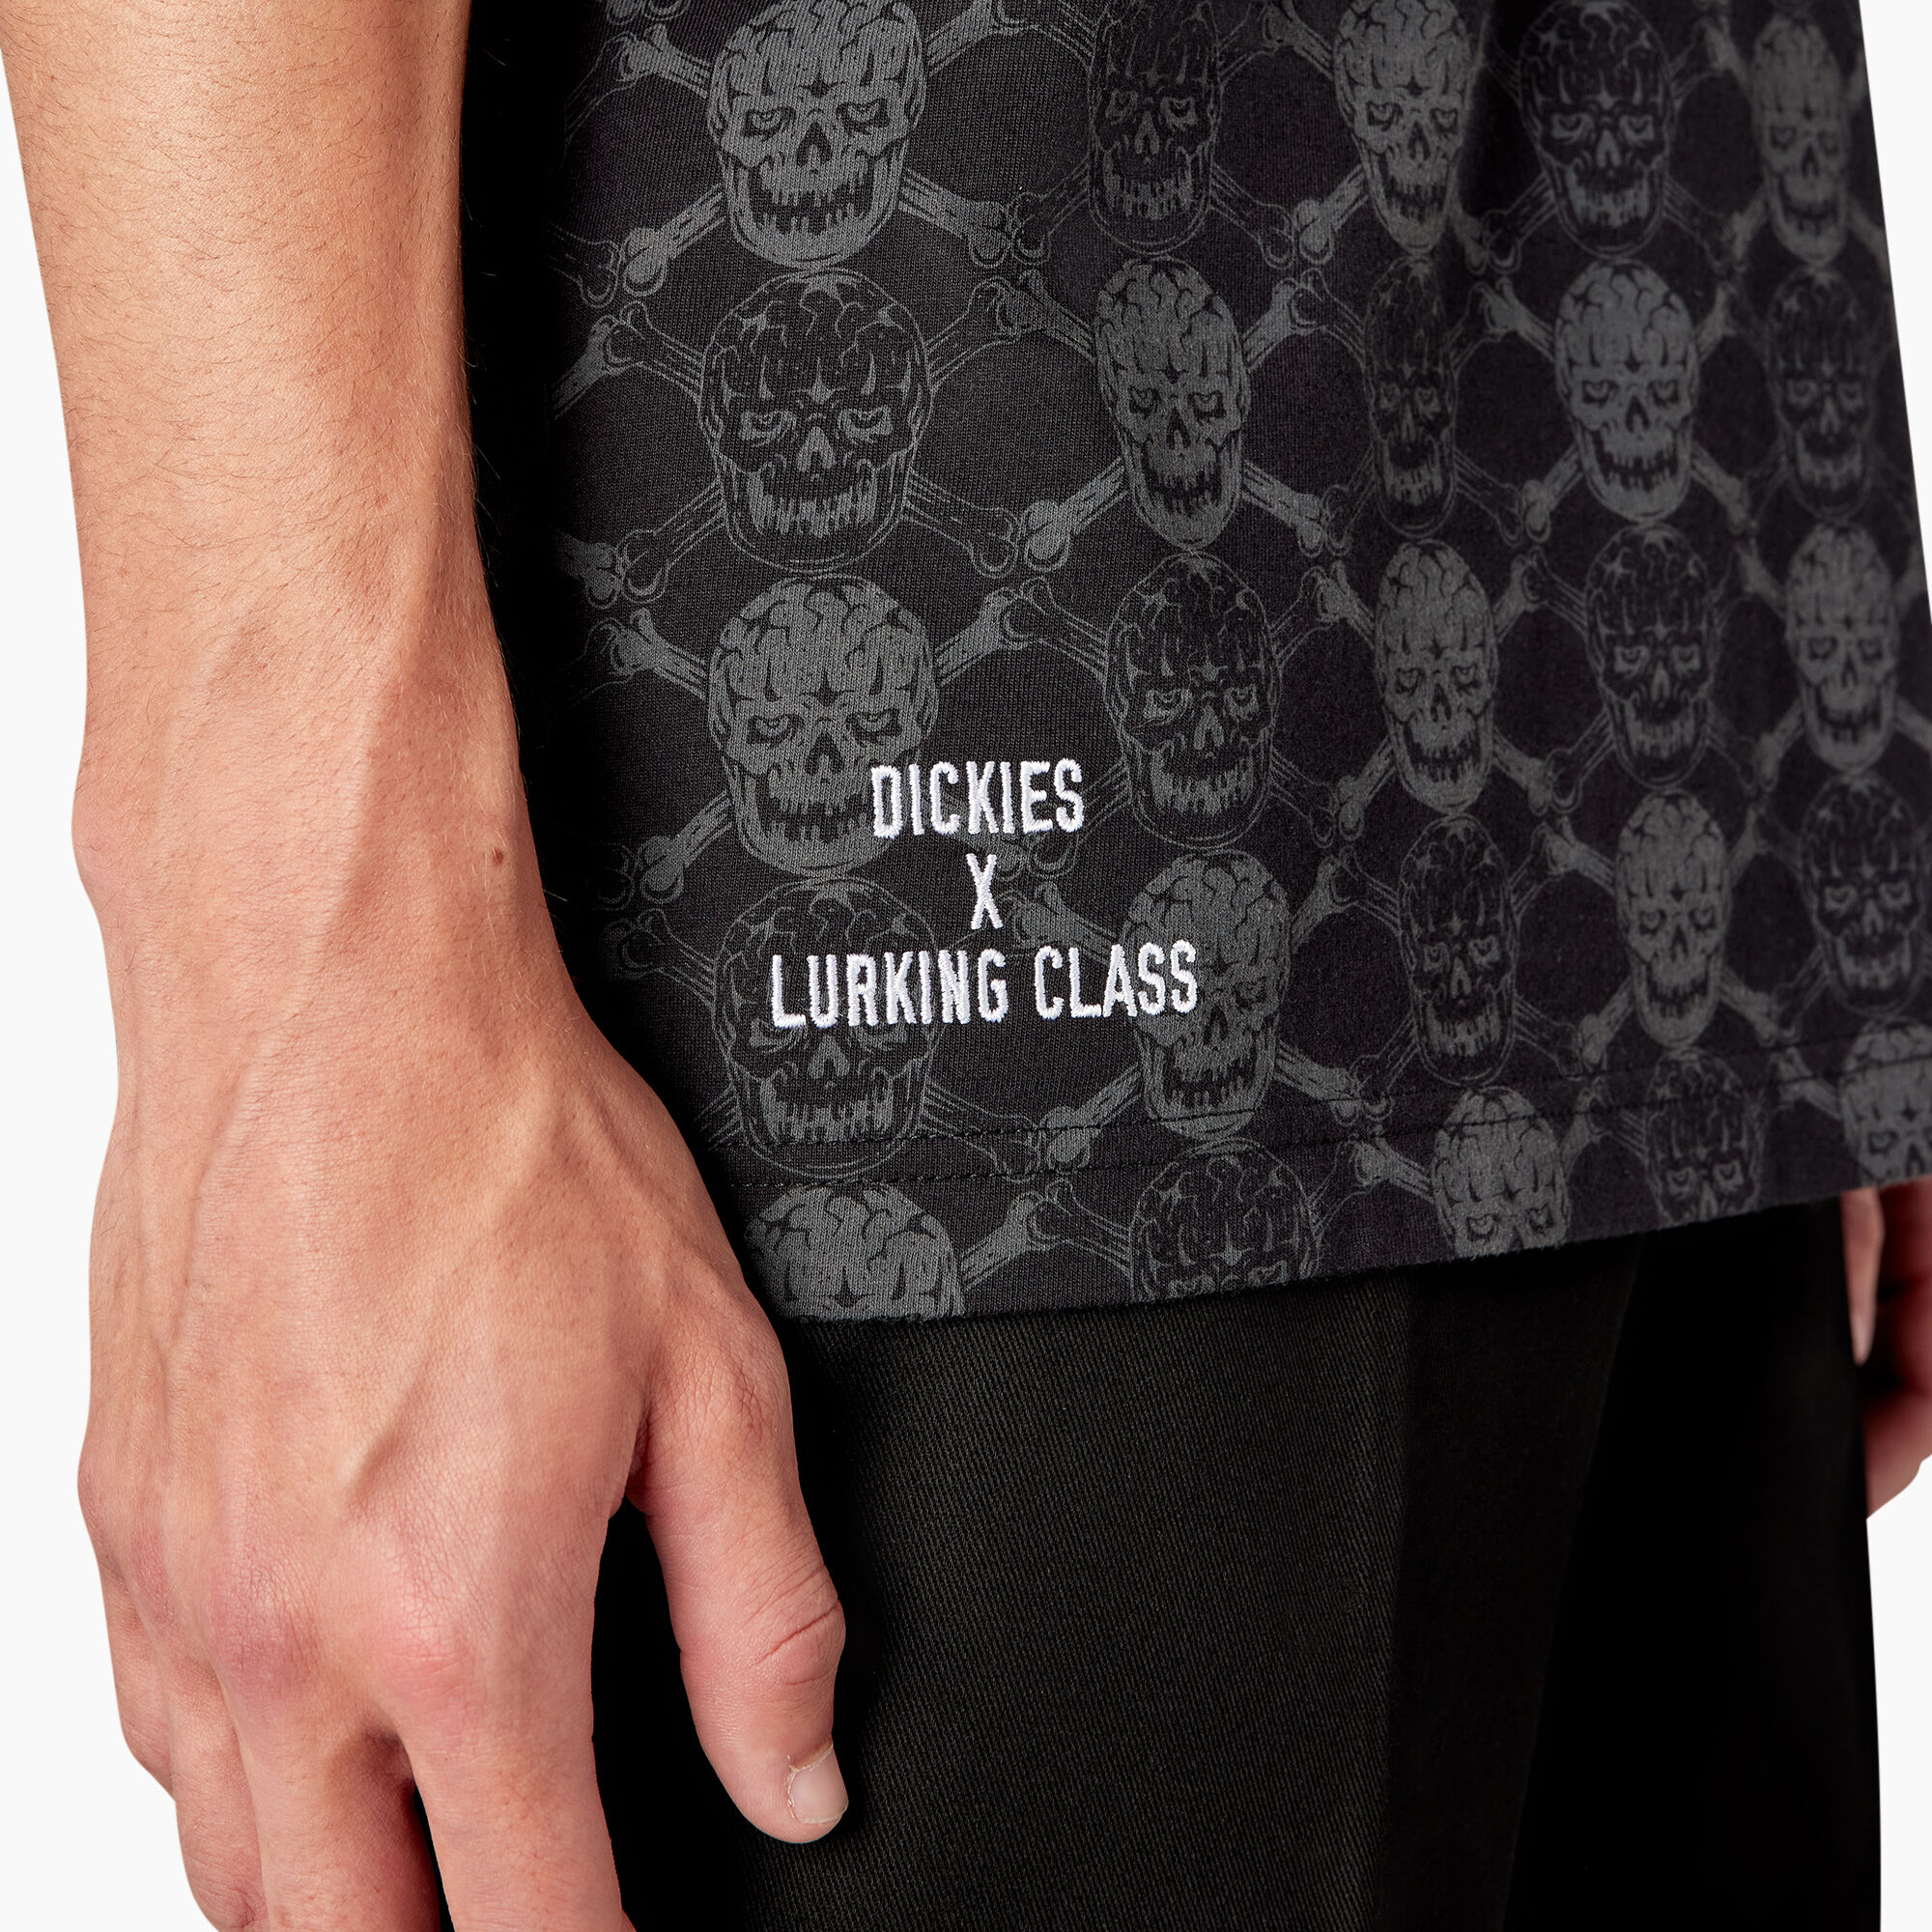 Dickies x Lurking Class T-Shirt